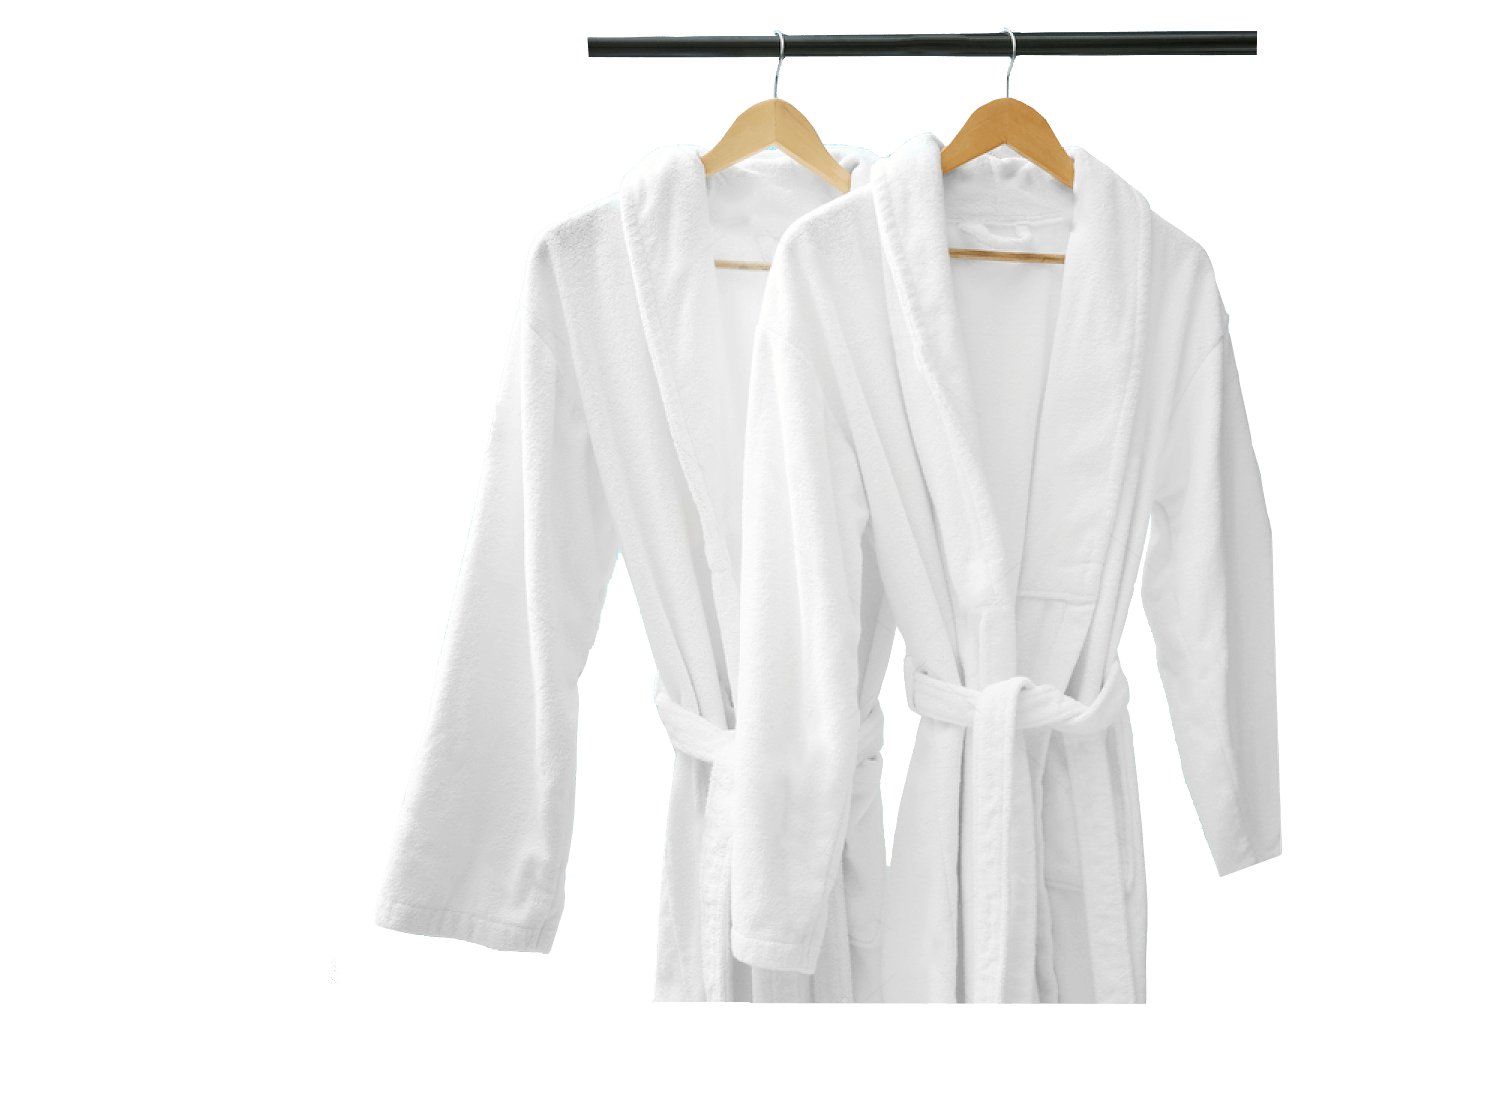 bathrobes-hanging-on-rack-